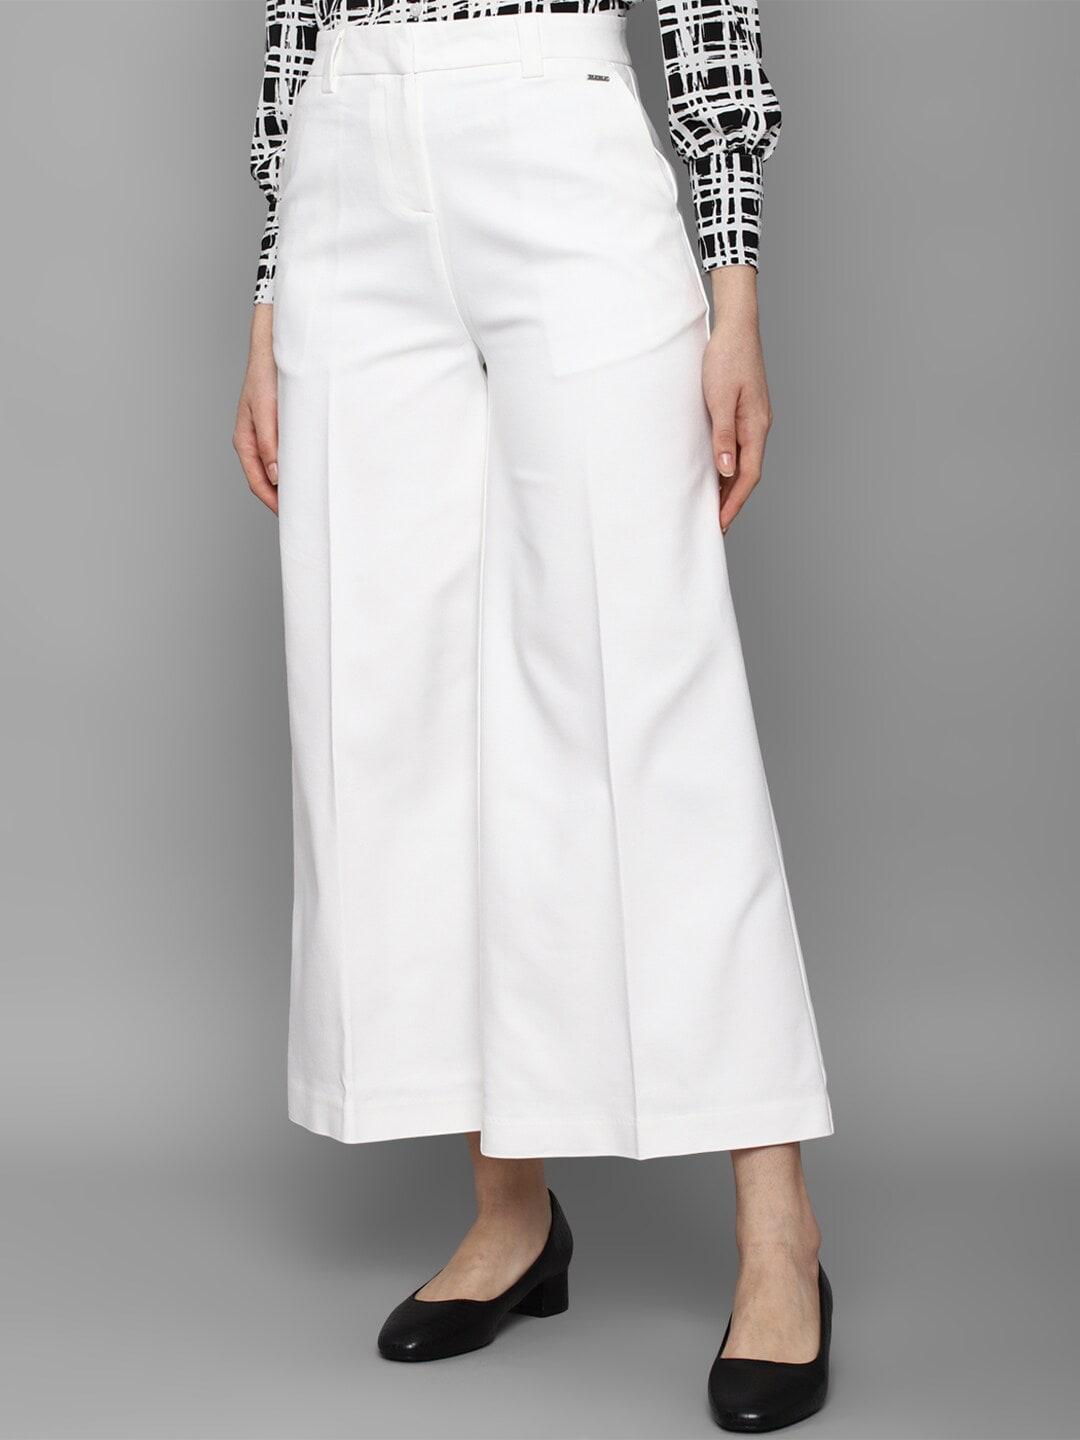 Allen Solly Woman Women White Culottes Trousers